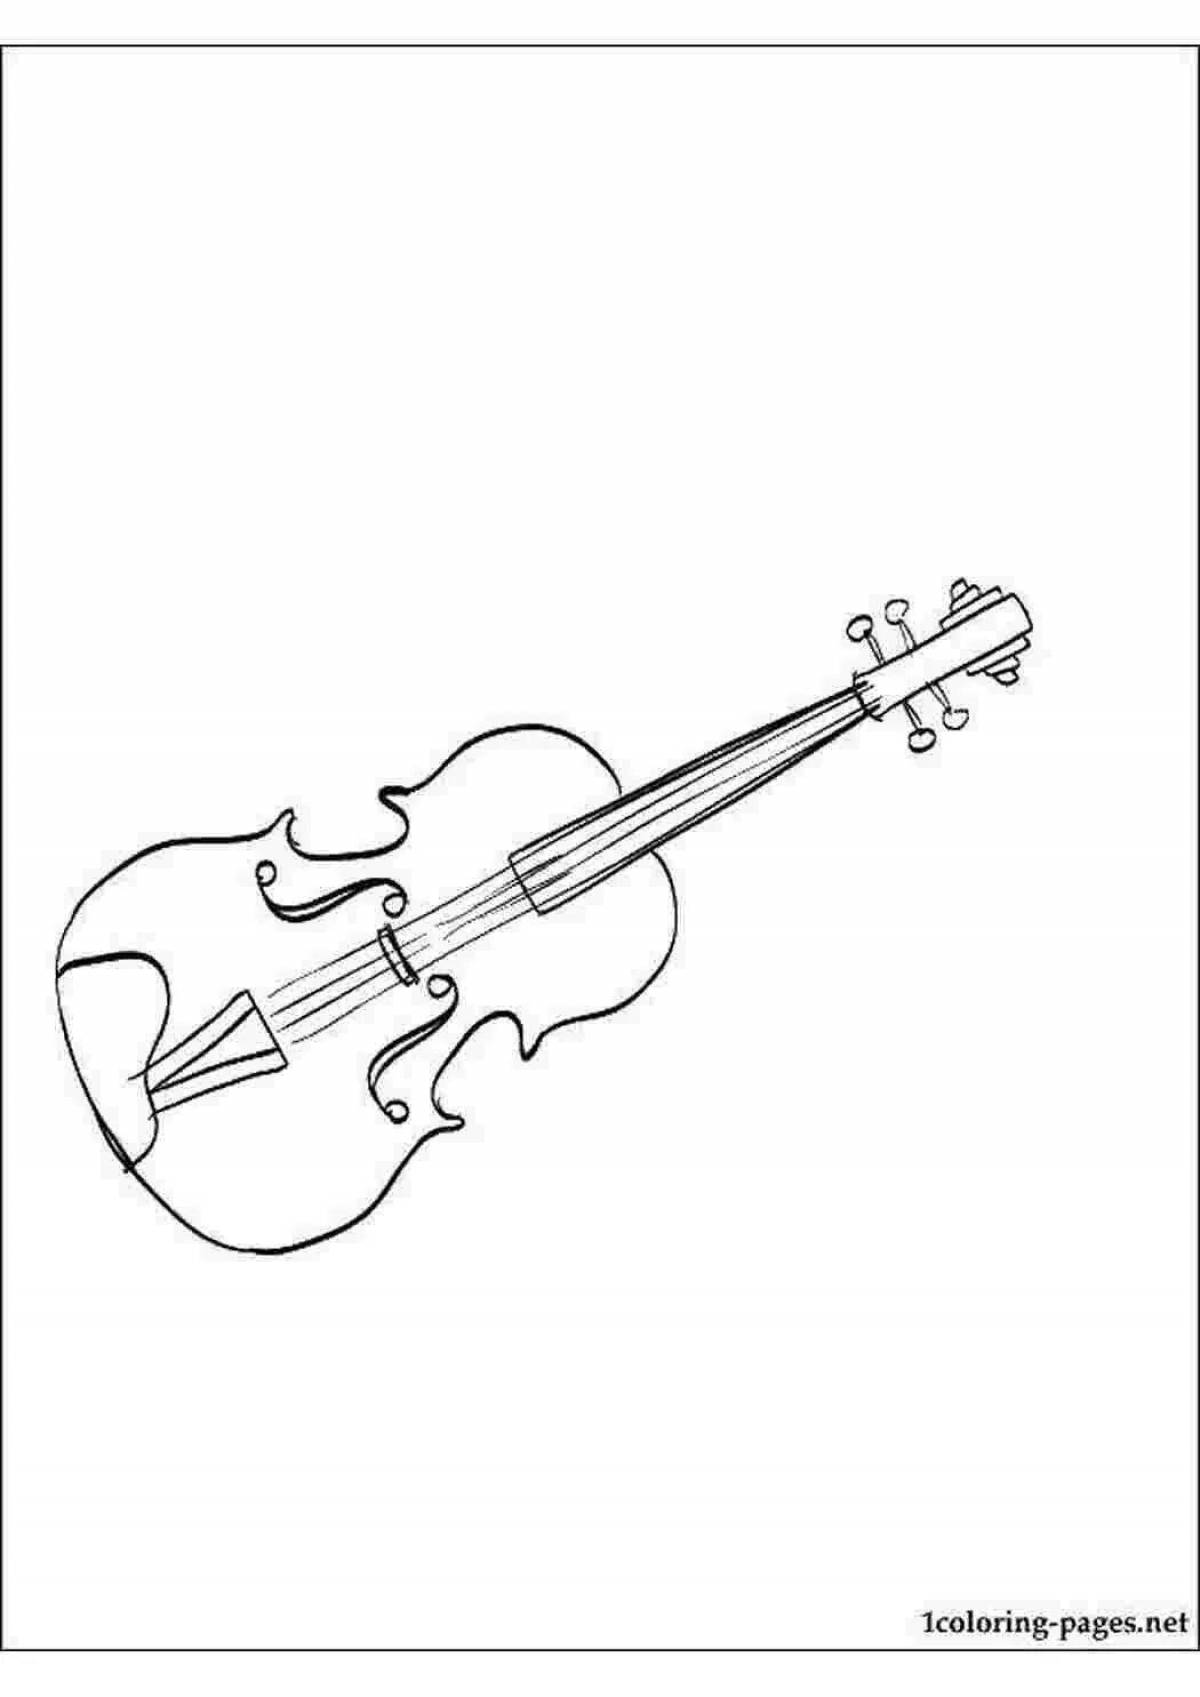 Violin coloring book for preschoolers